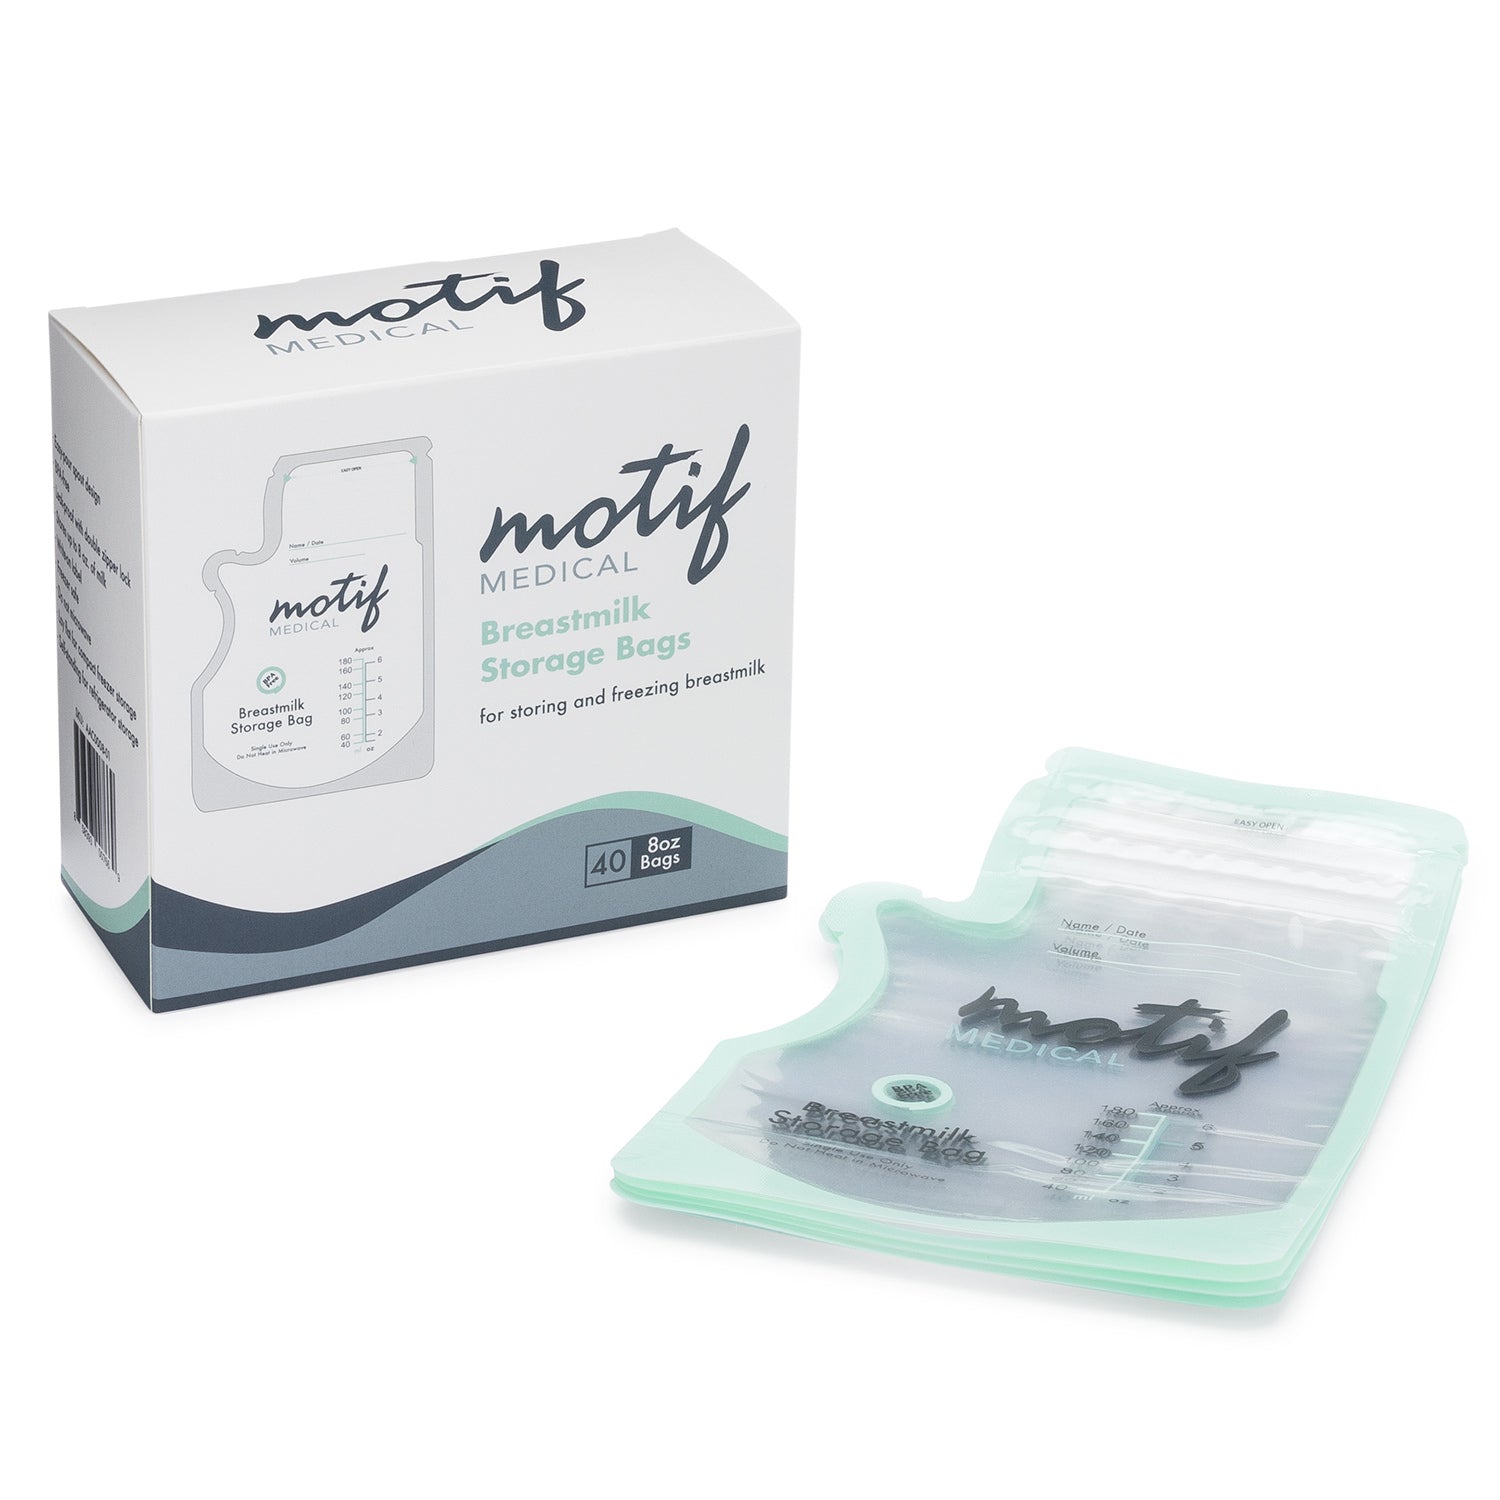 Box of 40 Motif Medical Breastmilk Storage Freezer Bags.